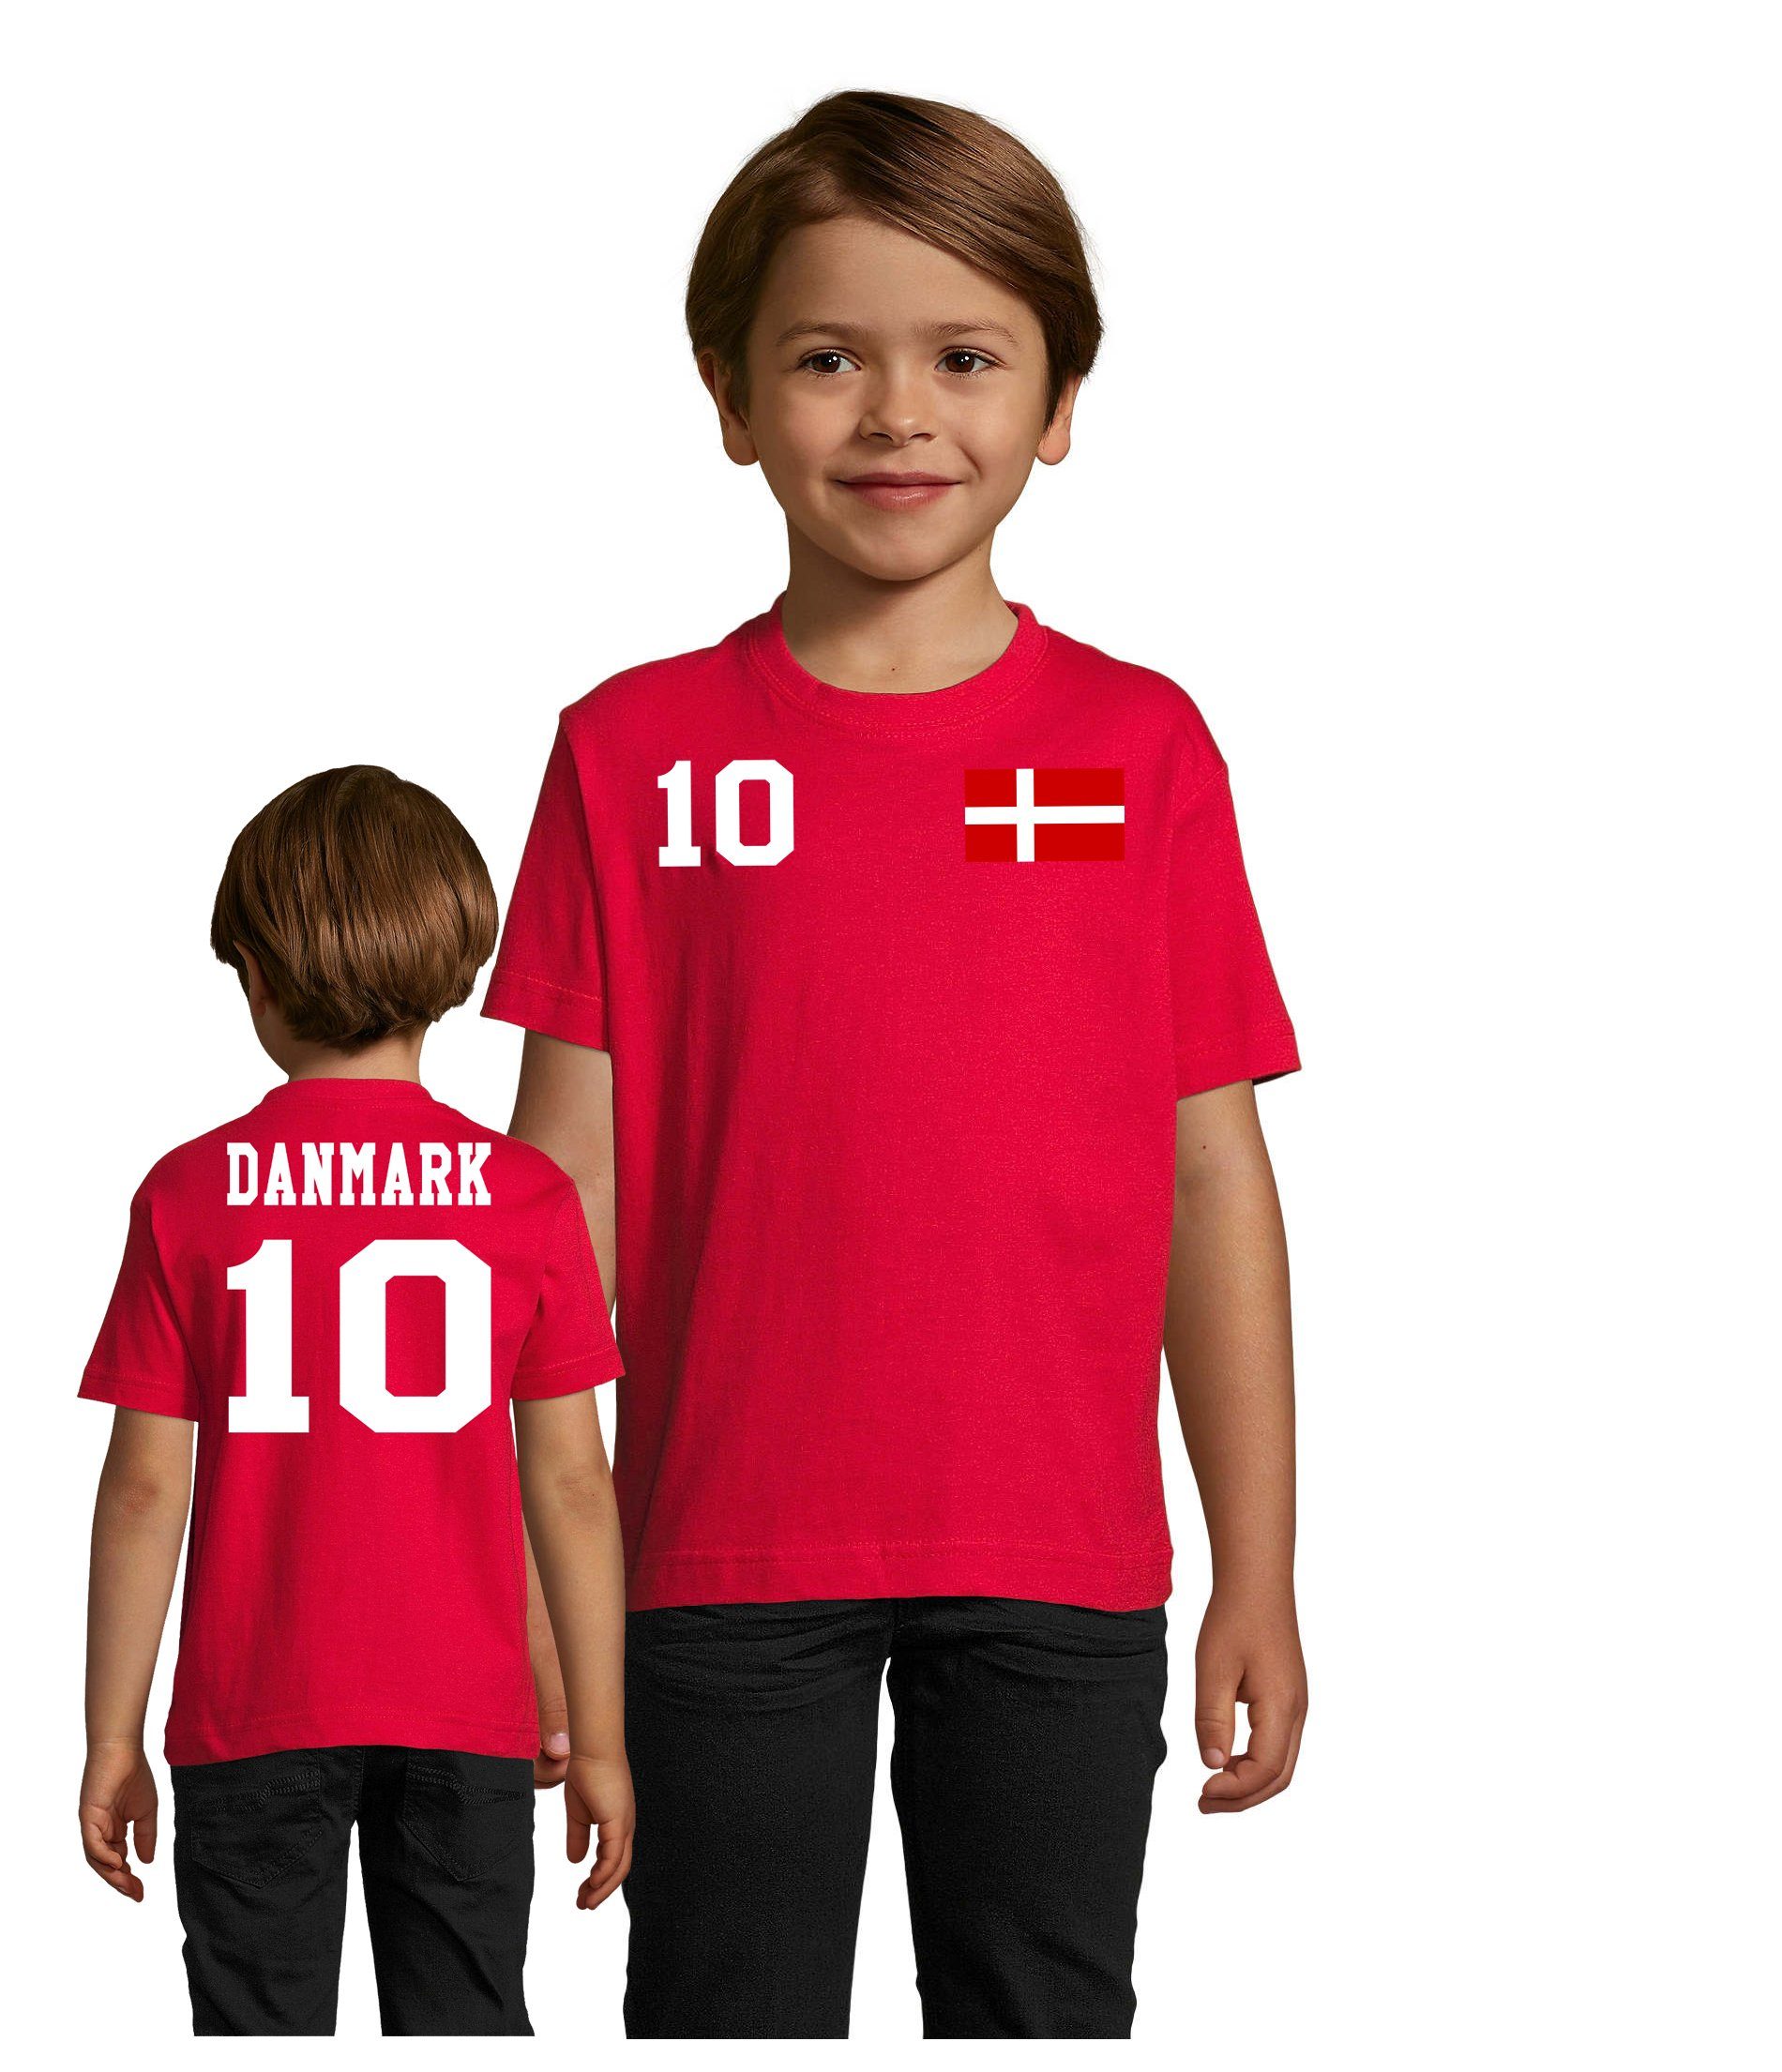 Blondie & Brownie T-Shirt Kinder Dänemark Denmark Sport Trikot Fußball Weltmeister EM | T-Shirts